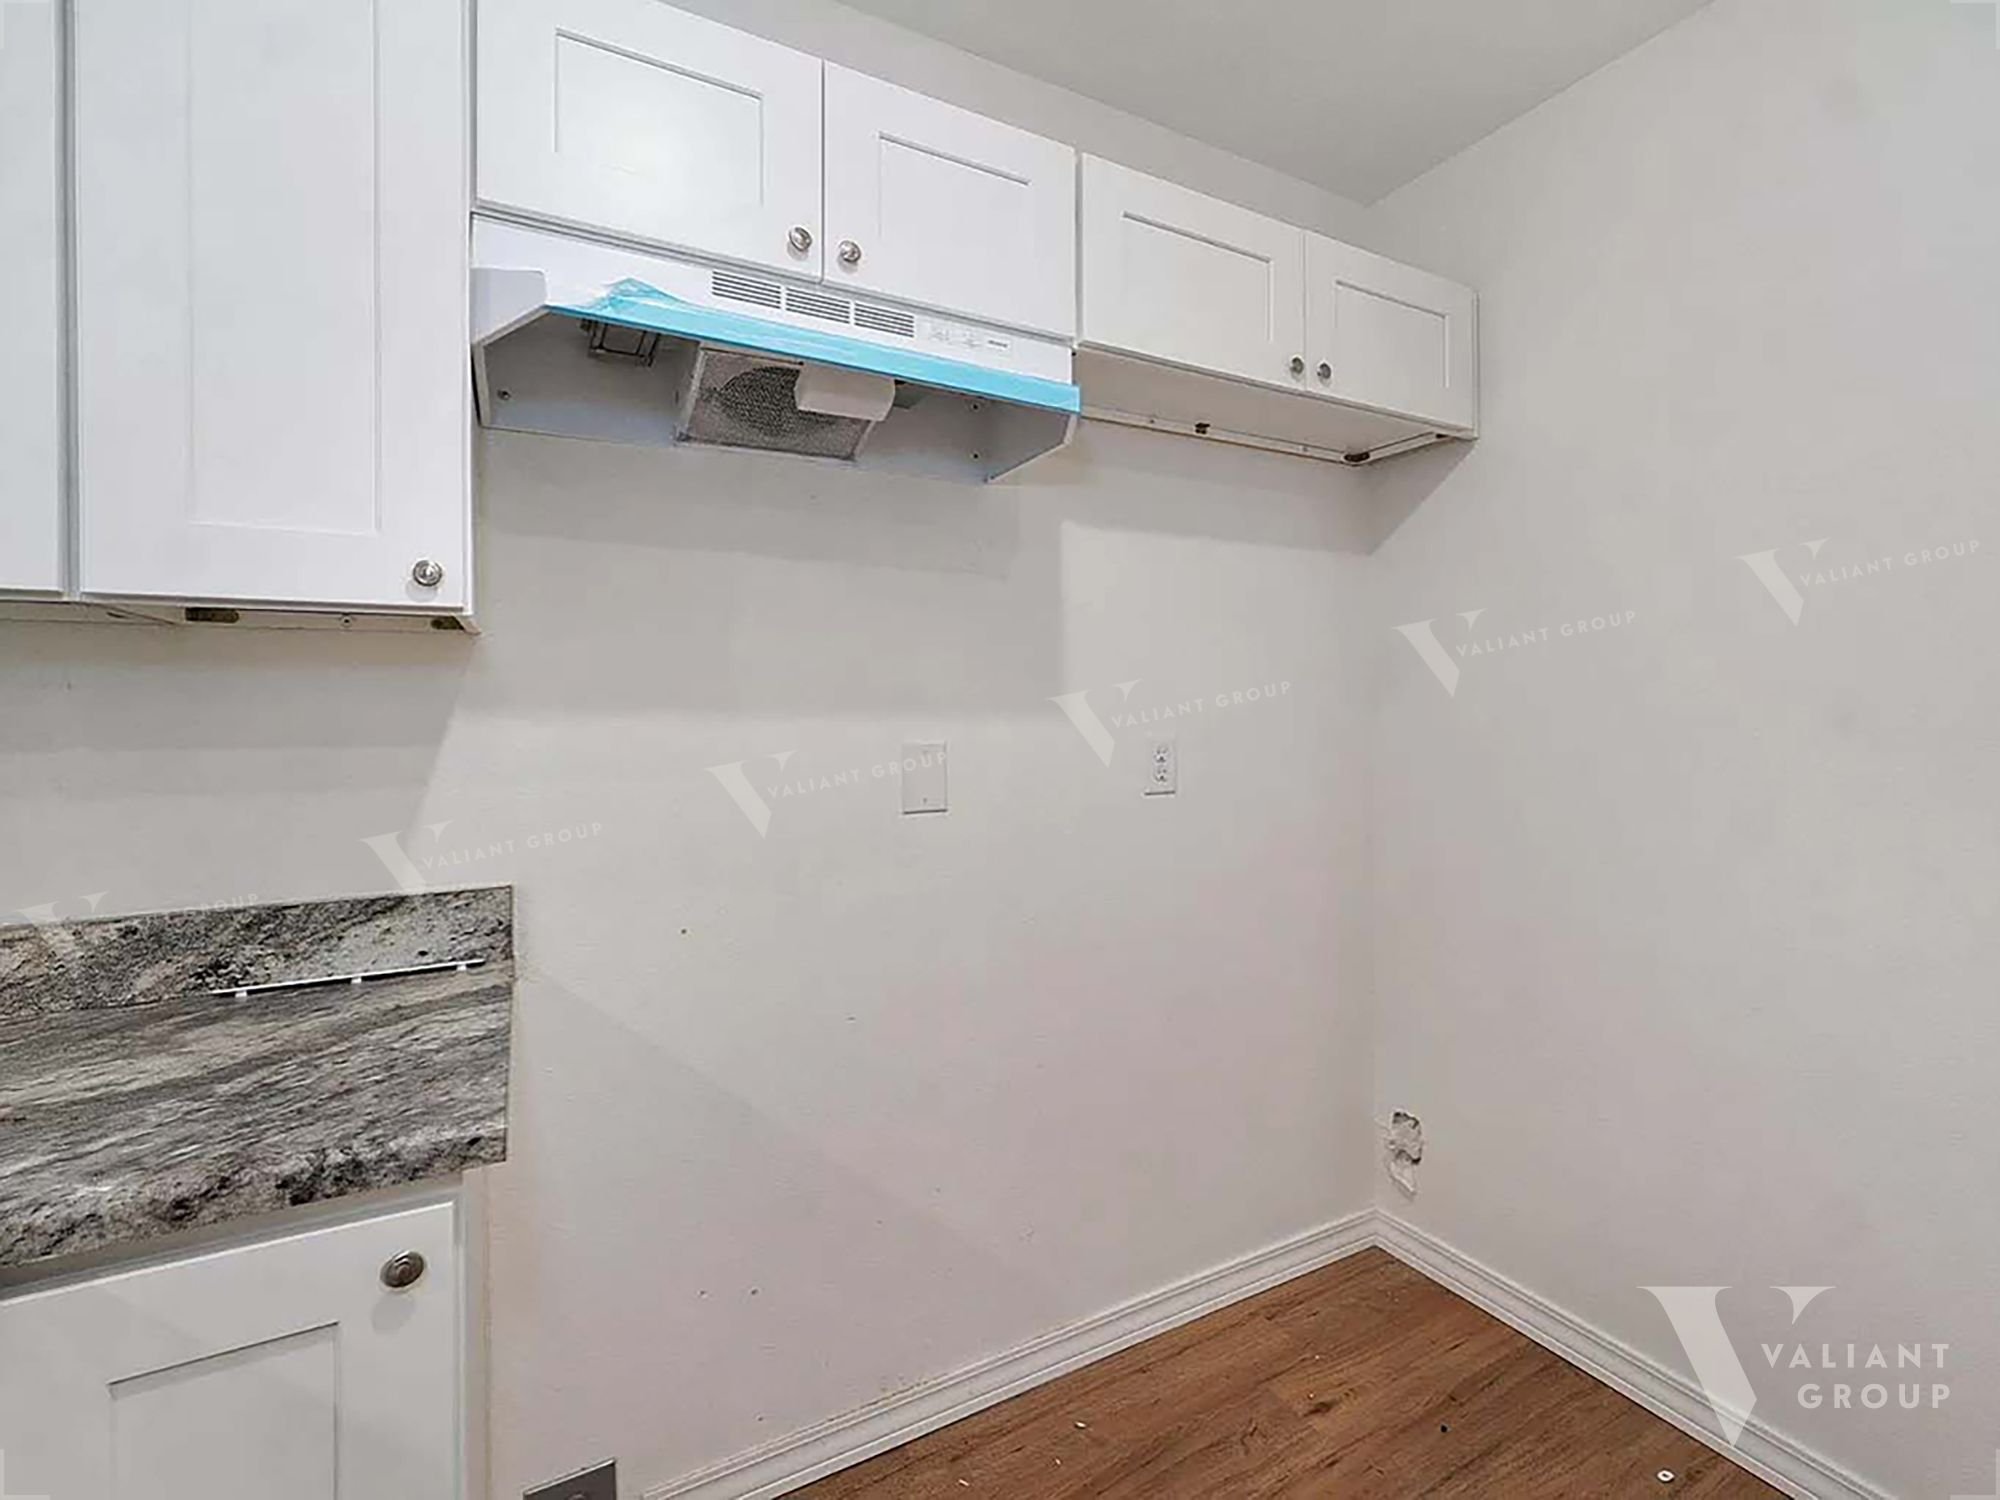 Duplex-For-Rent-Springfield-MO-1618-West-Scott-St-Unit-A-kitchen-stove-fridge.jpg